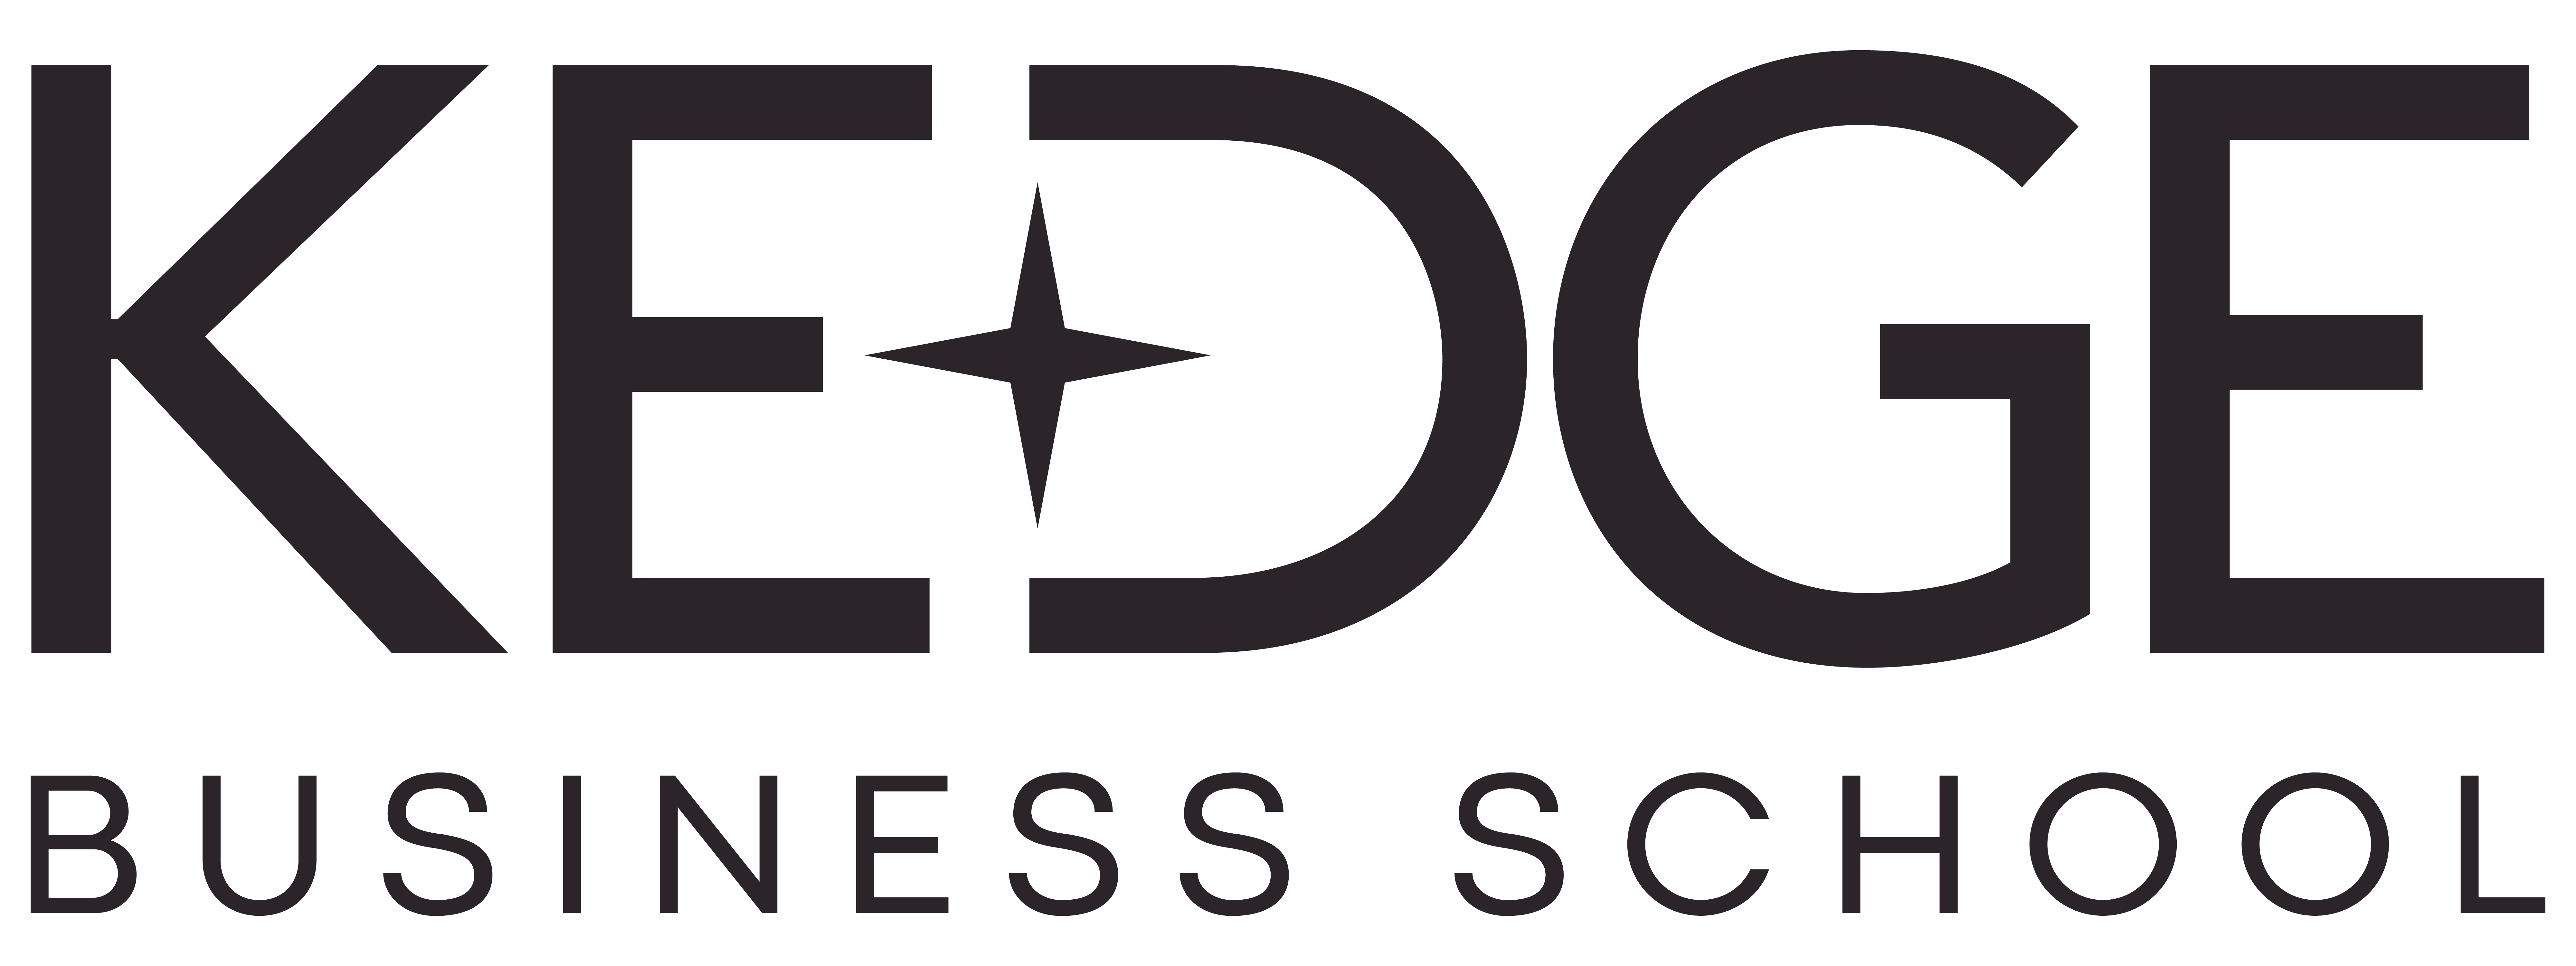 logo_kedgebs